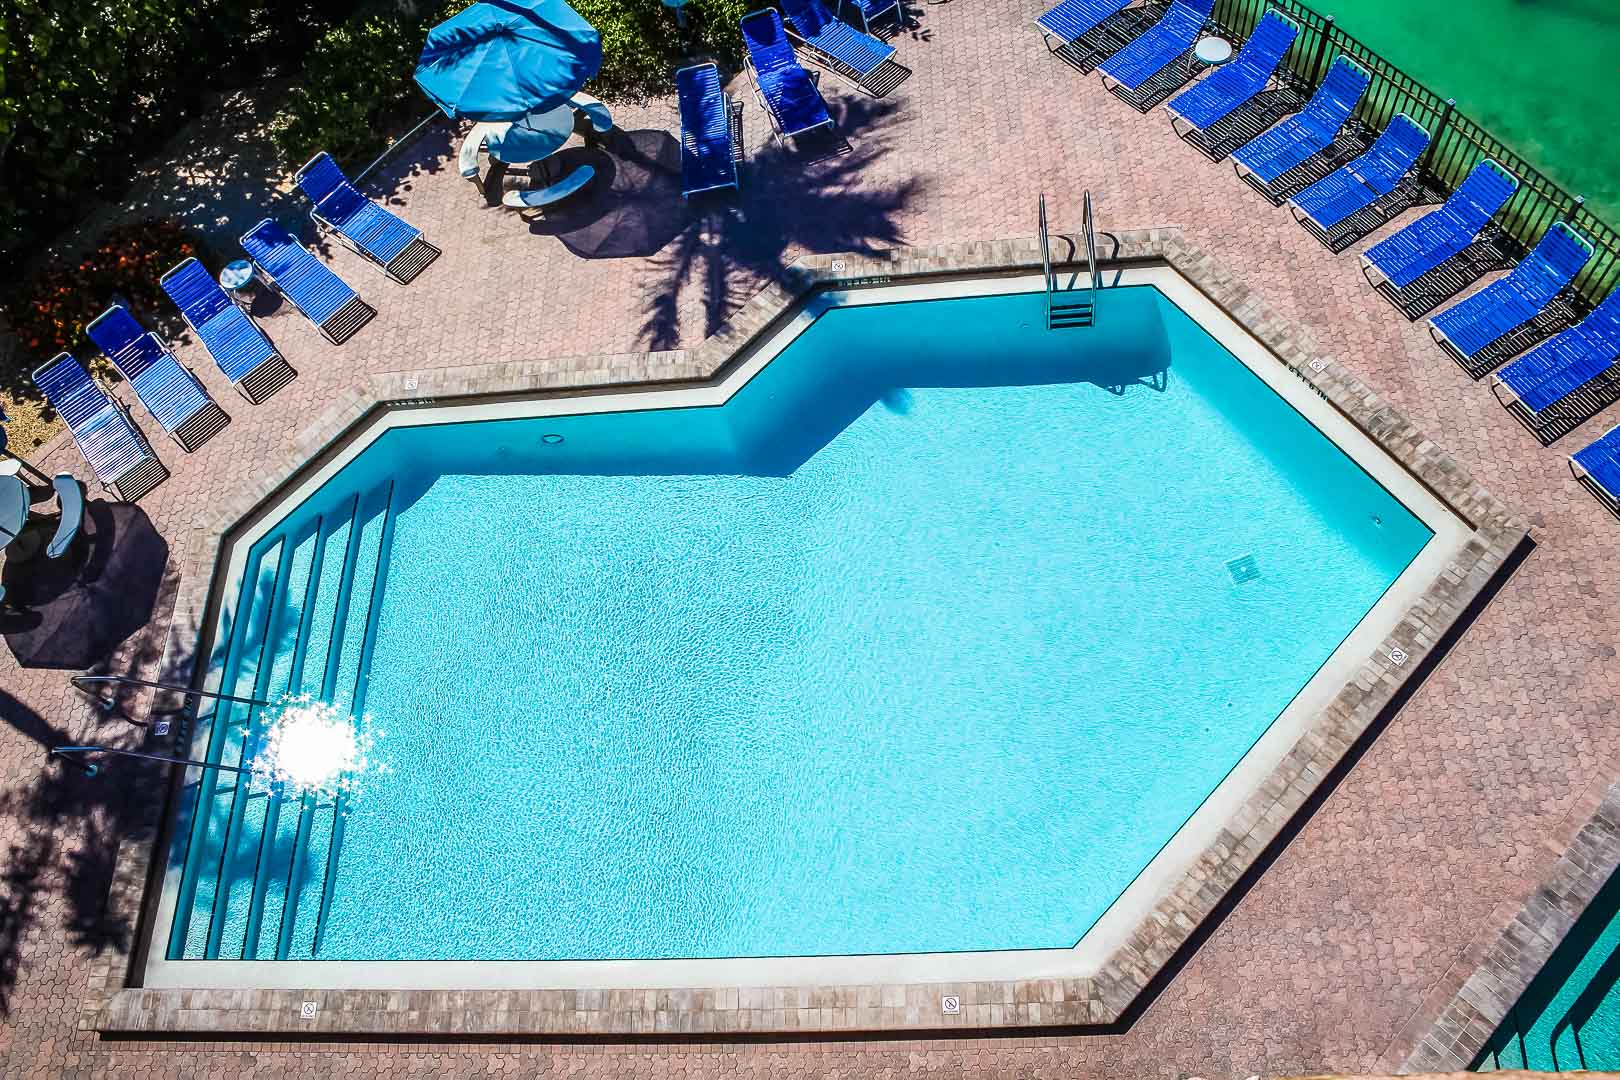 A spacious outdoor swimming pool at VRI's Bonita Resort and Club in Florida.